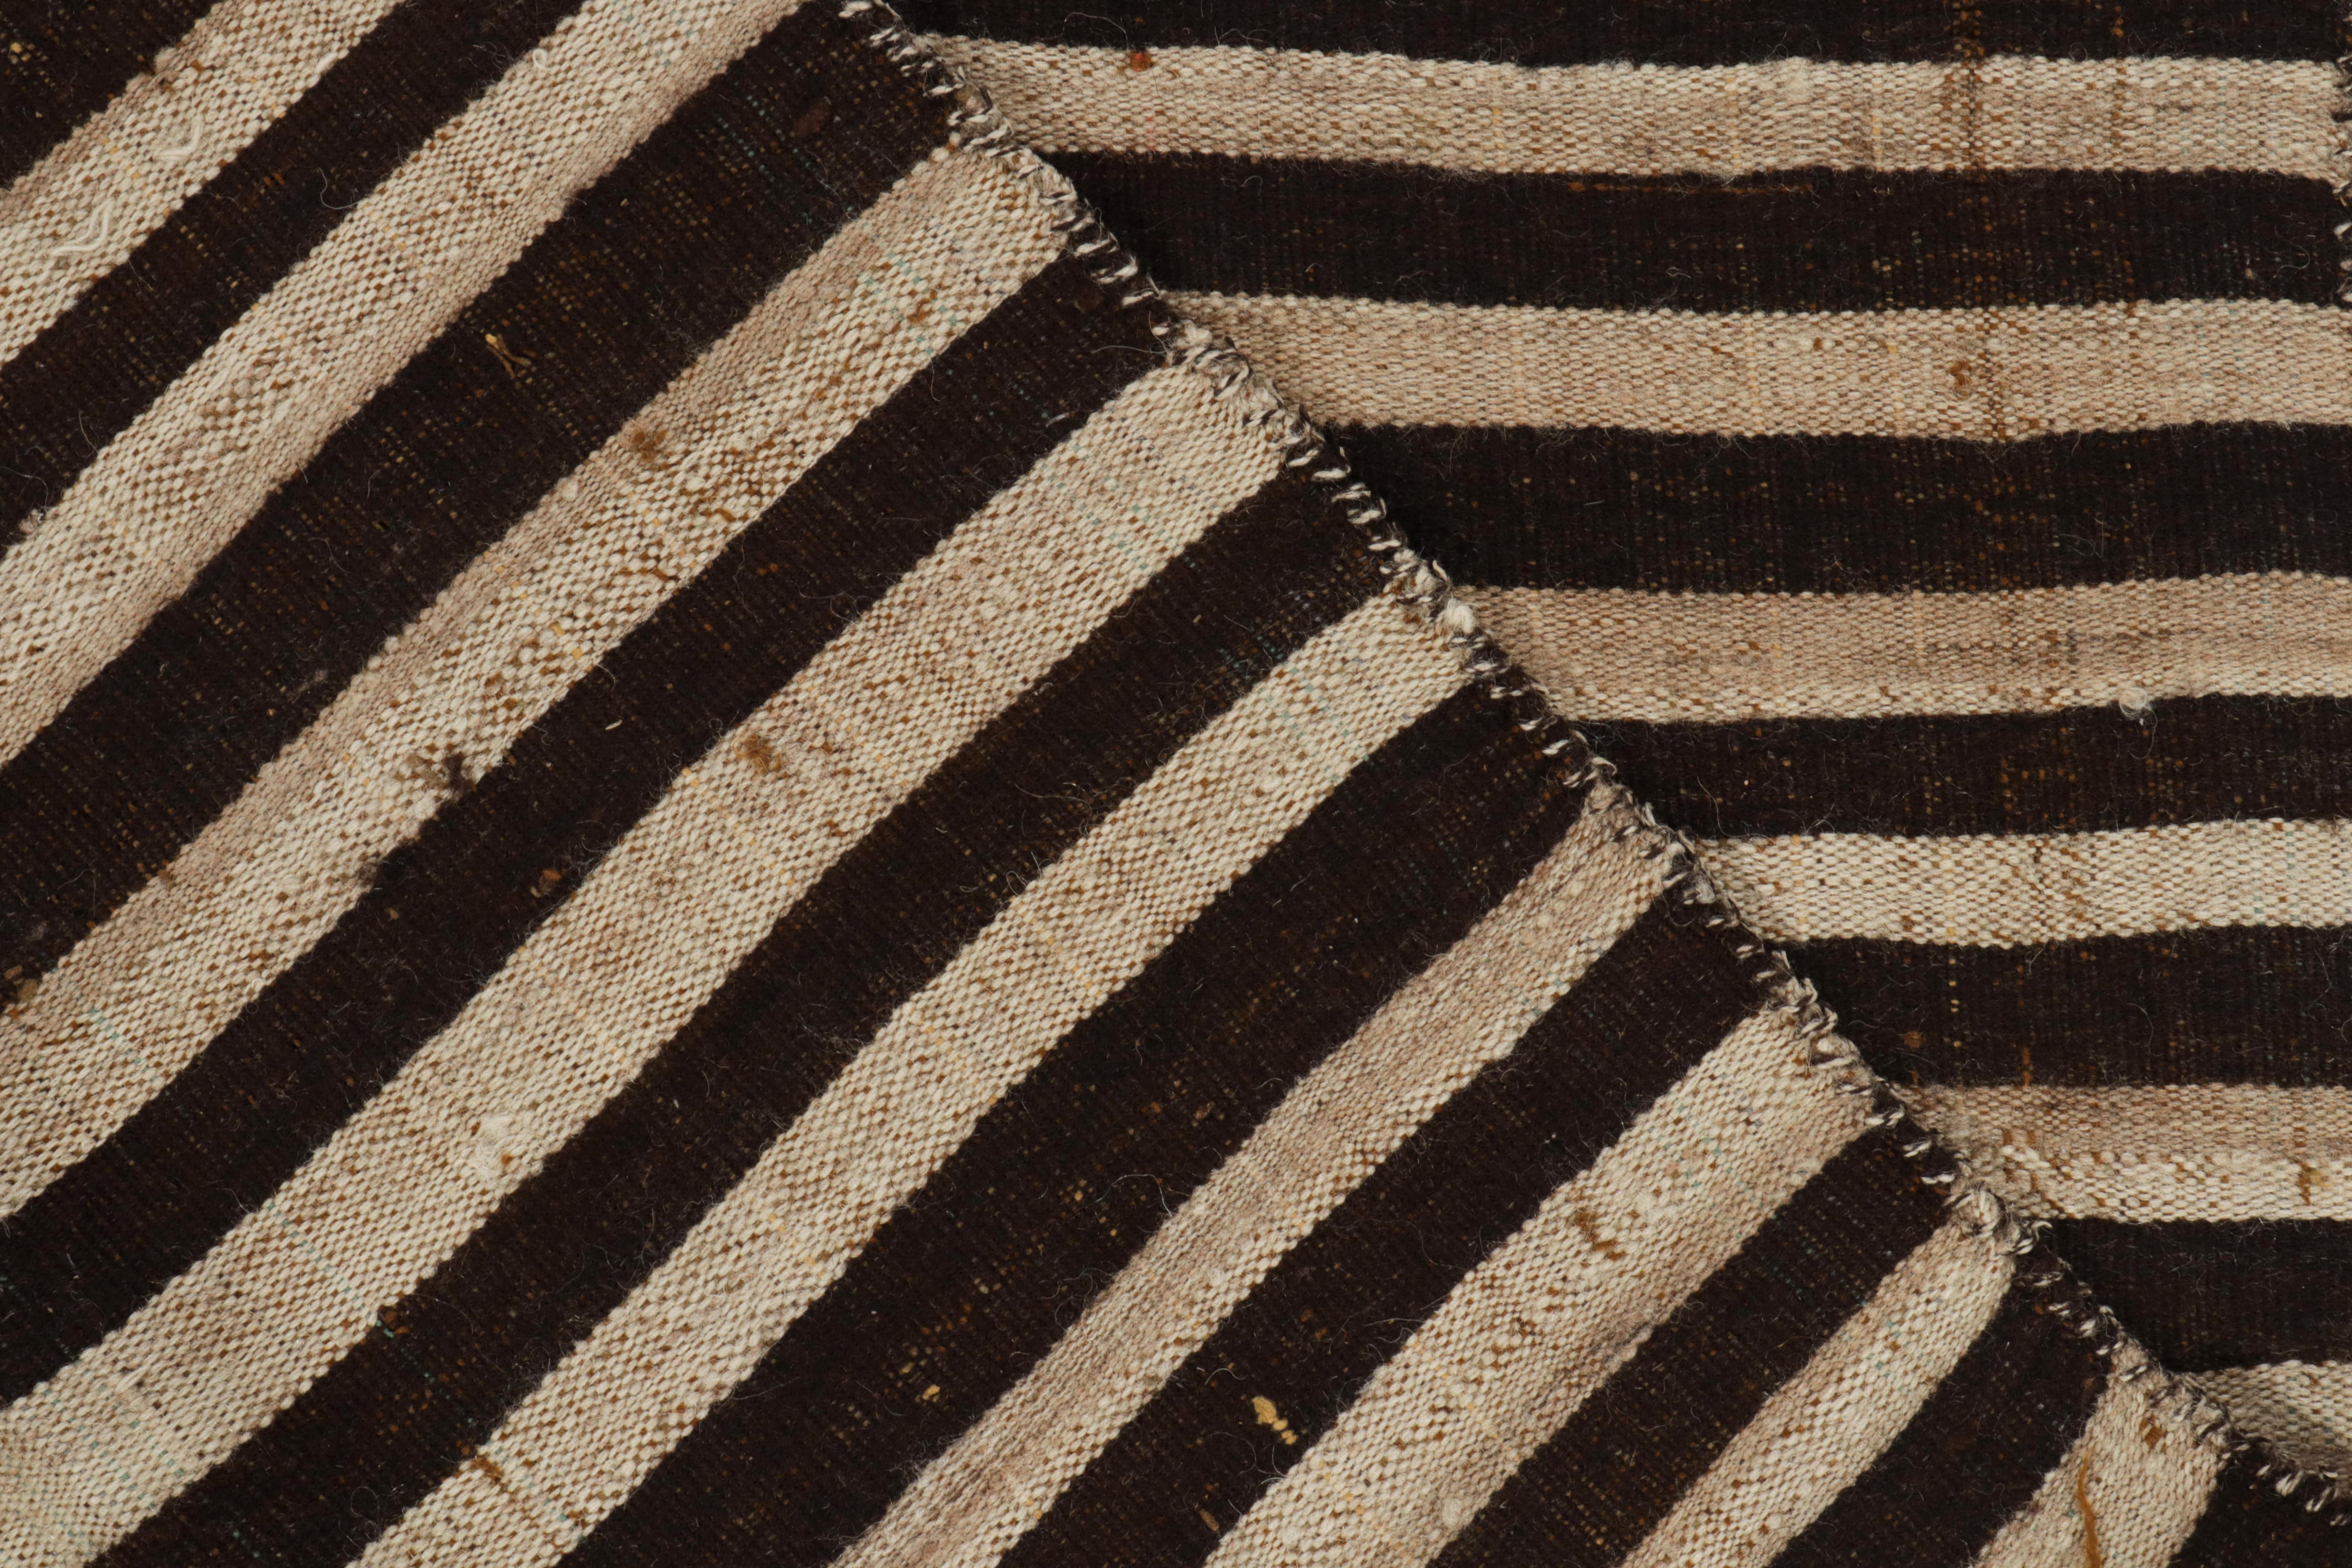 Contemporary Modern Kilim runners in Beige-Brown & Black Stripe Patterns, set by Rug & Kilim For Sale